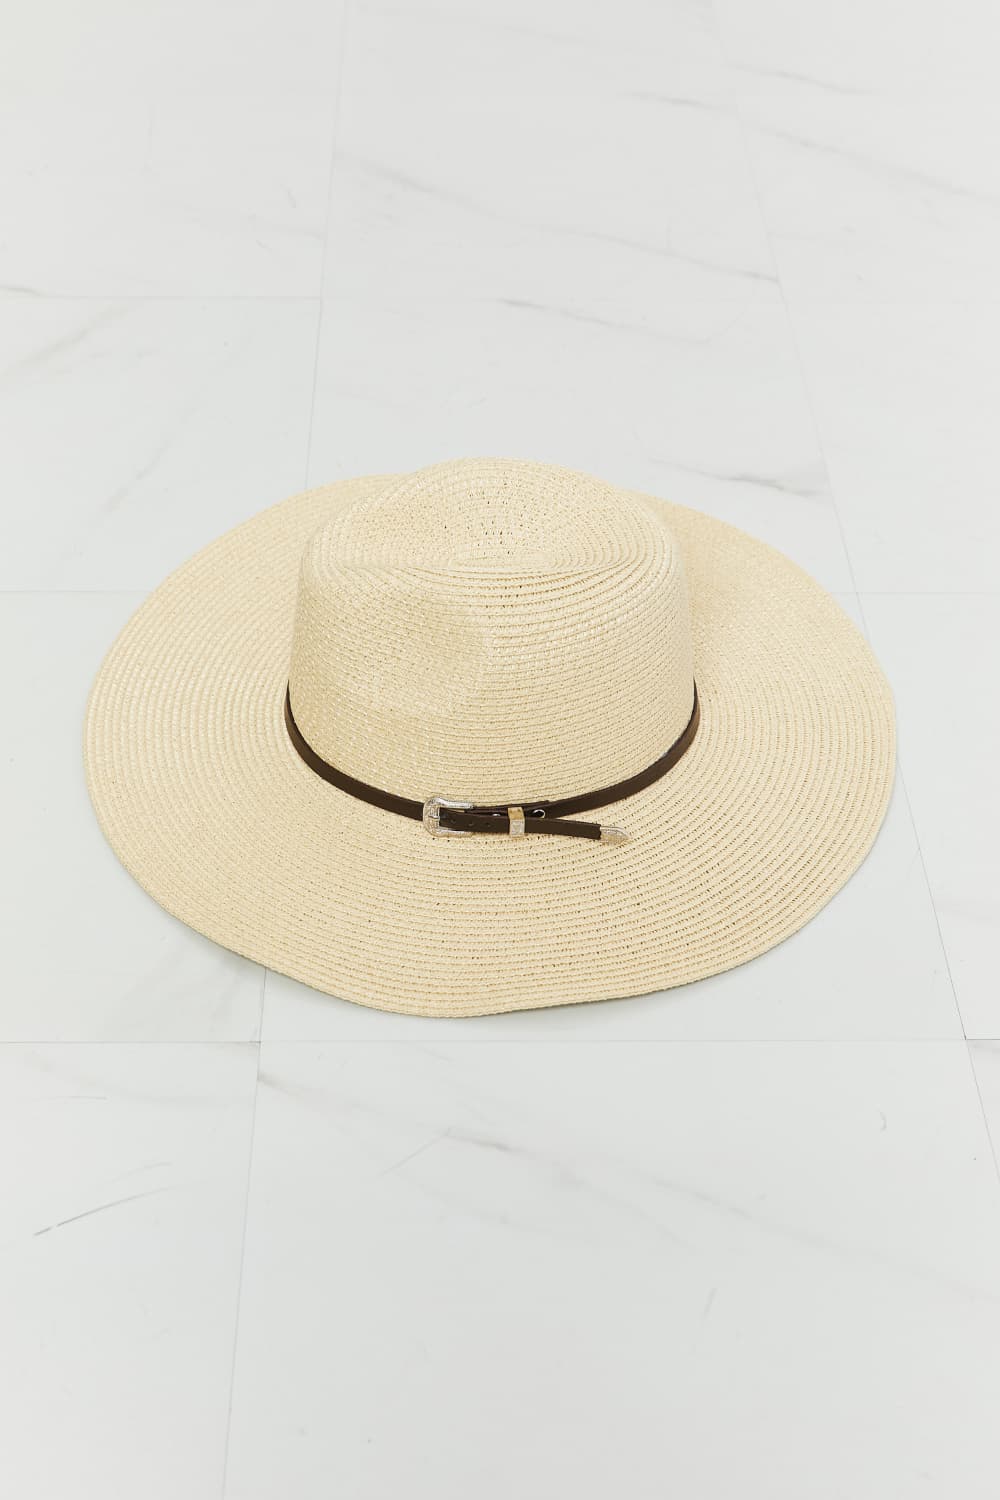 Fame Boho Summer Straw Fedora Hat apparel & accessories